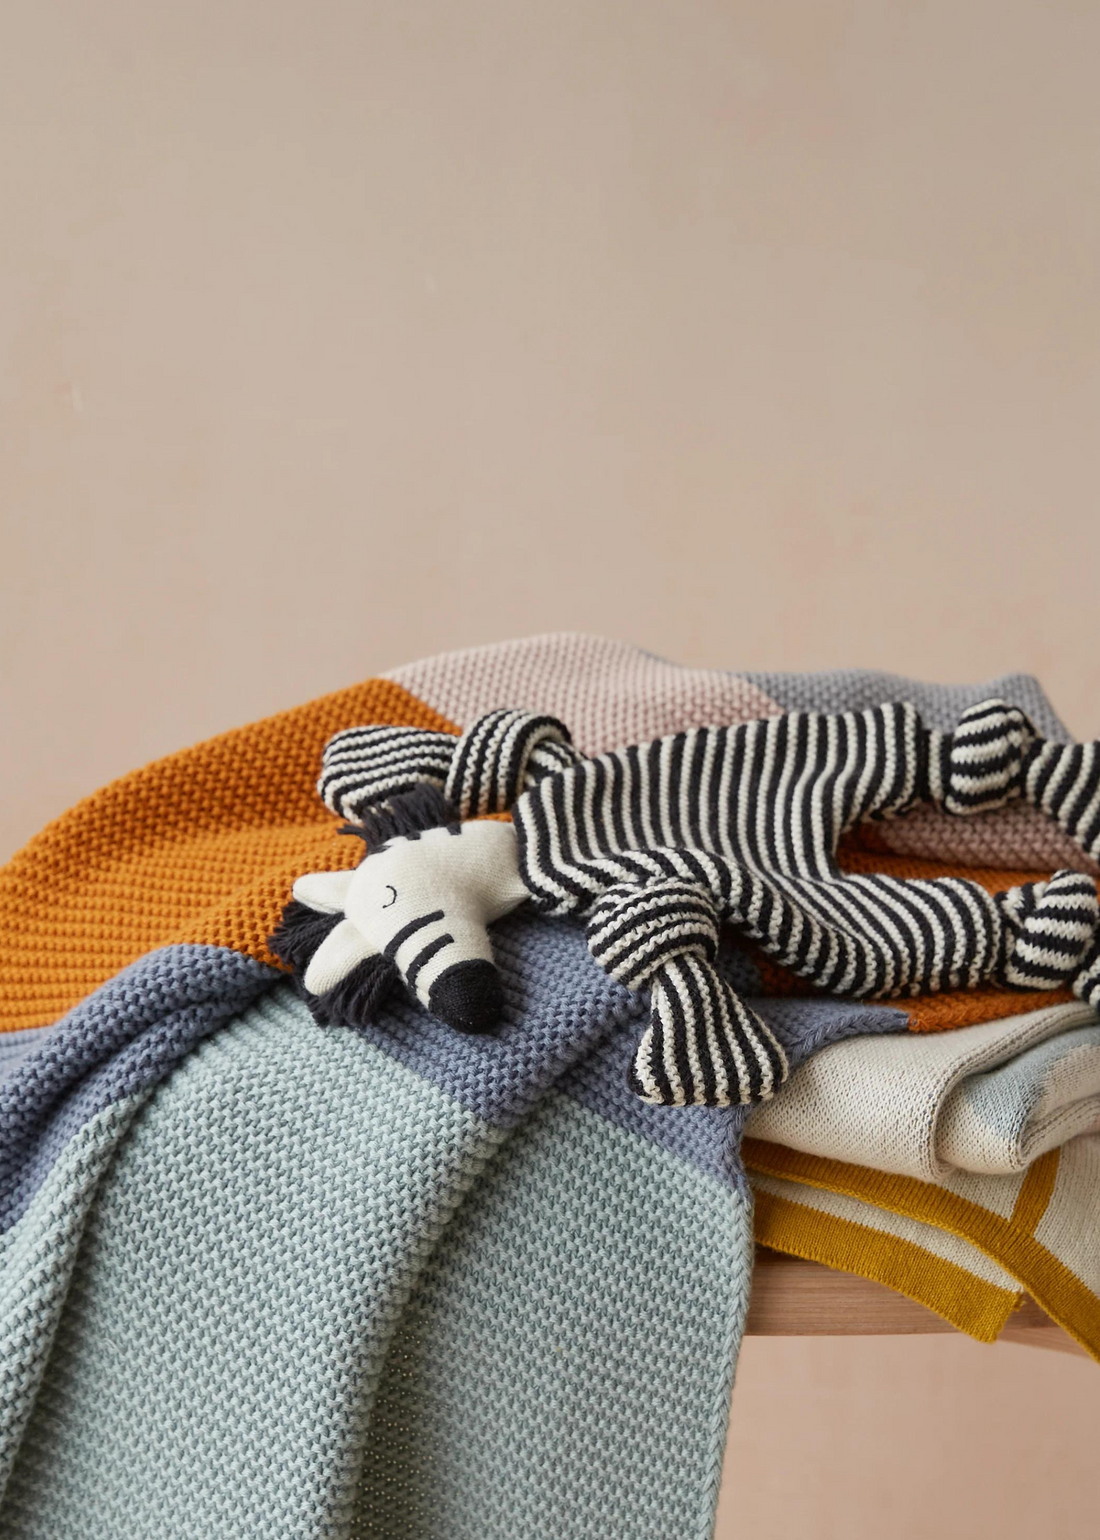  zebra baby comforter cuddle cloth